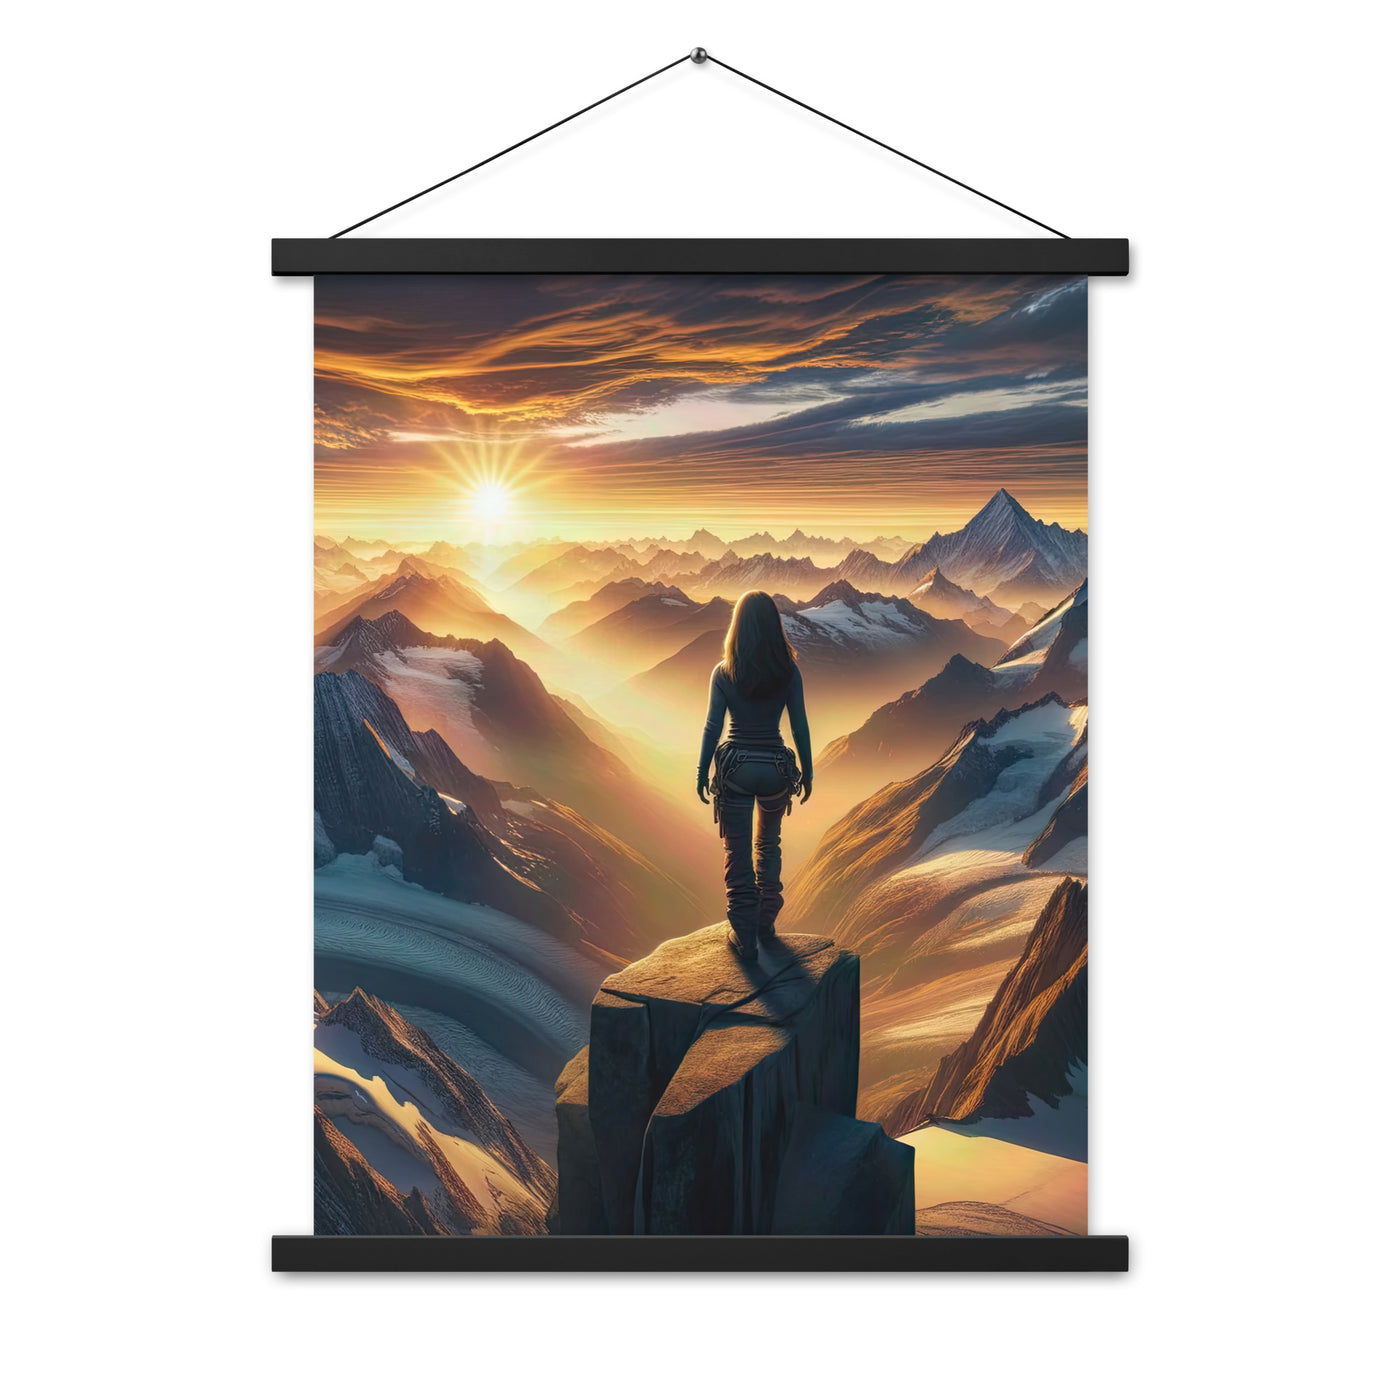 Fotorealistische Darstellung der Alpen bei Sonnenaufgang, Wanderin unter einem gold-purpurnen Himmel - Enhanced Matte Paper Poster With wandern xxx yyy zzz 45.7 x 61 cm